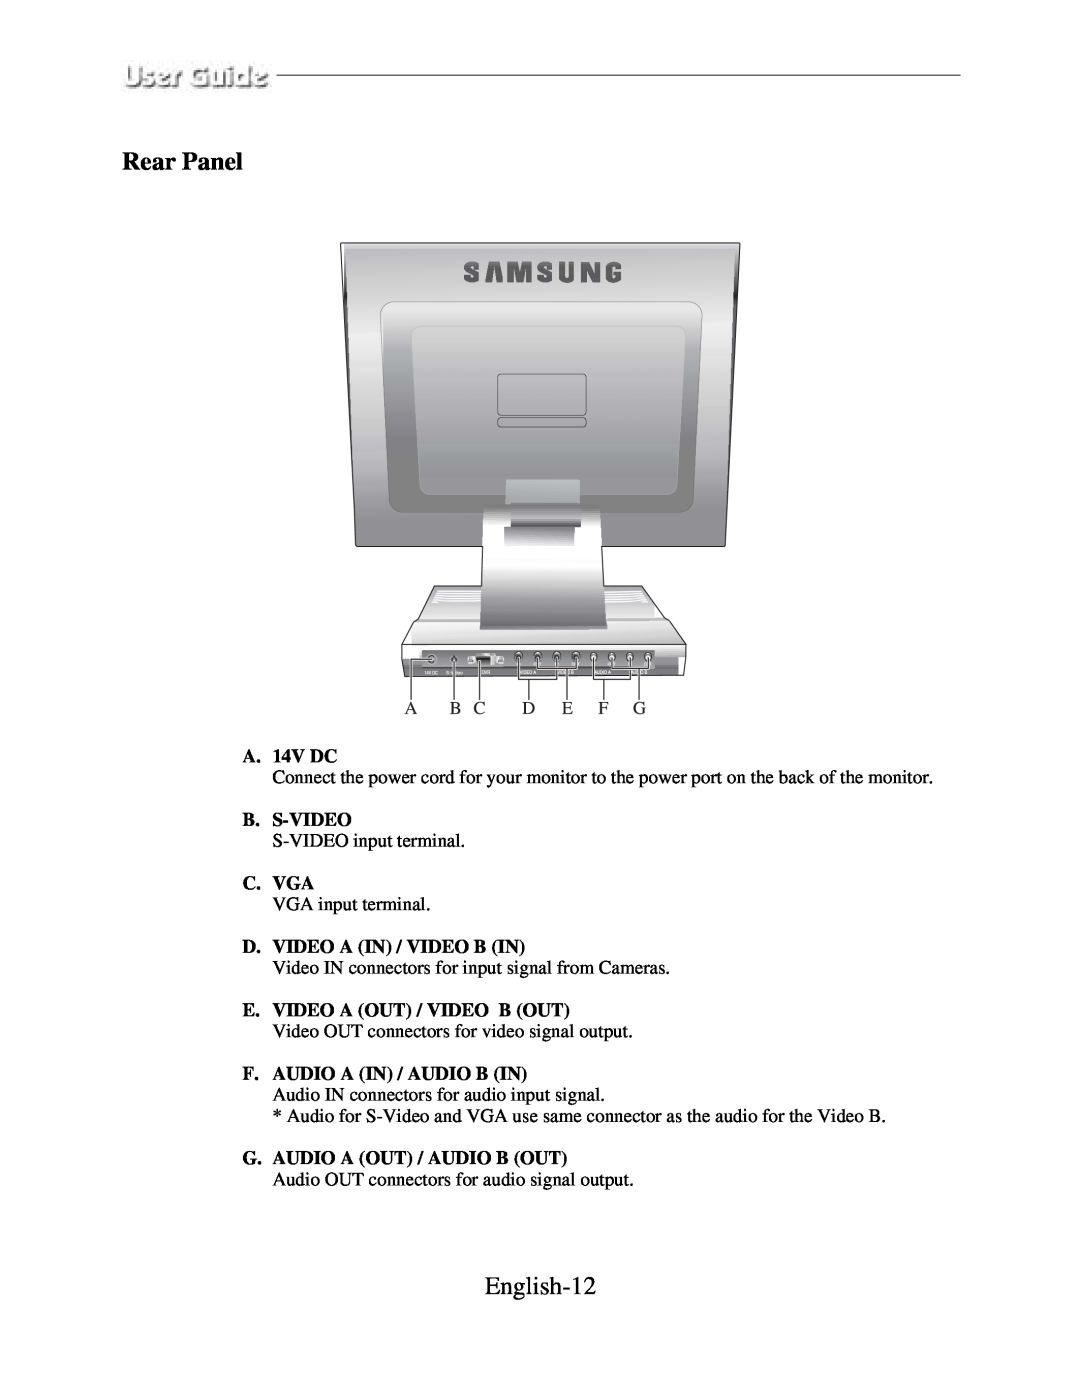 Samsung SMT-170P manual Rear Panel, English-12 